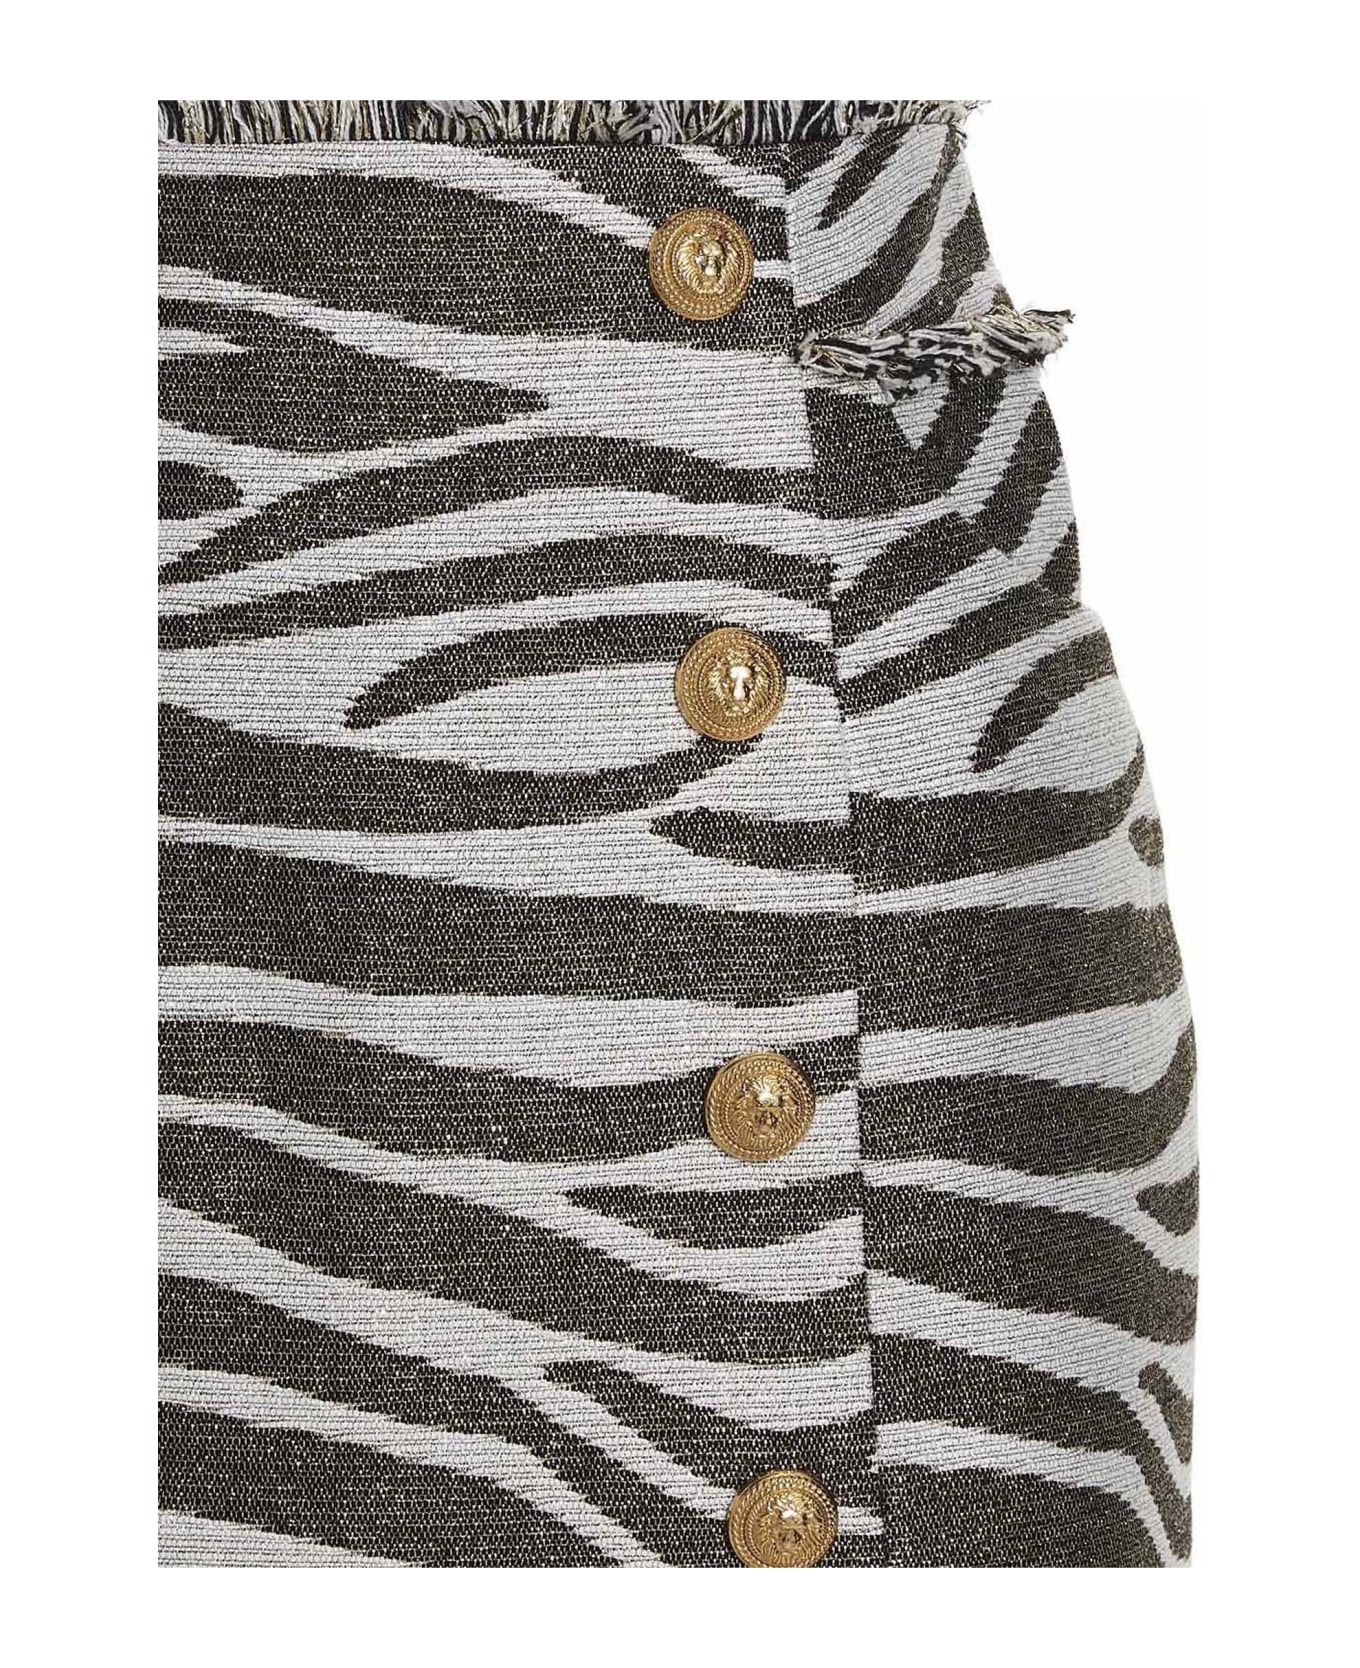 Balmain 'lurex Zebra' Skirt - Gad Blanc Or